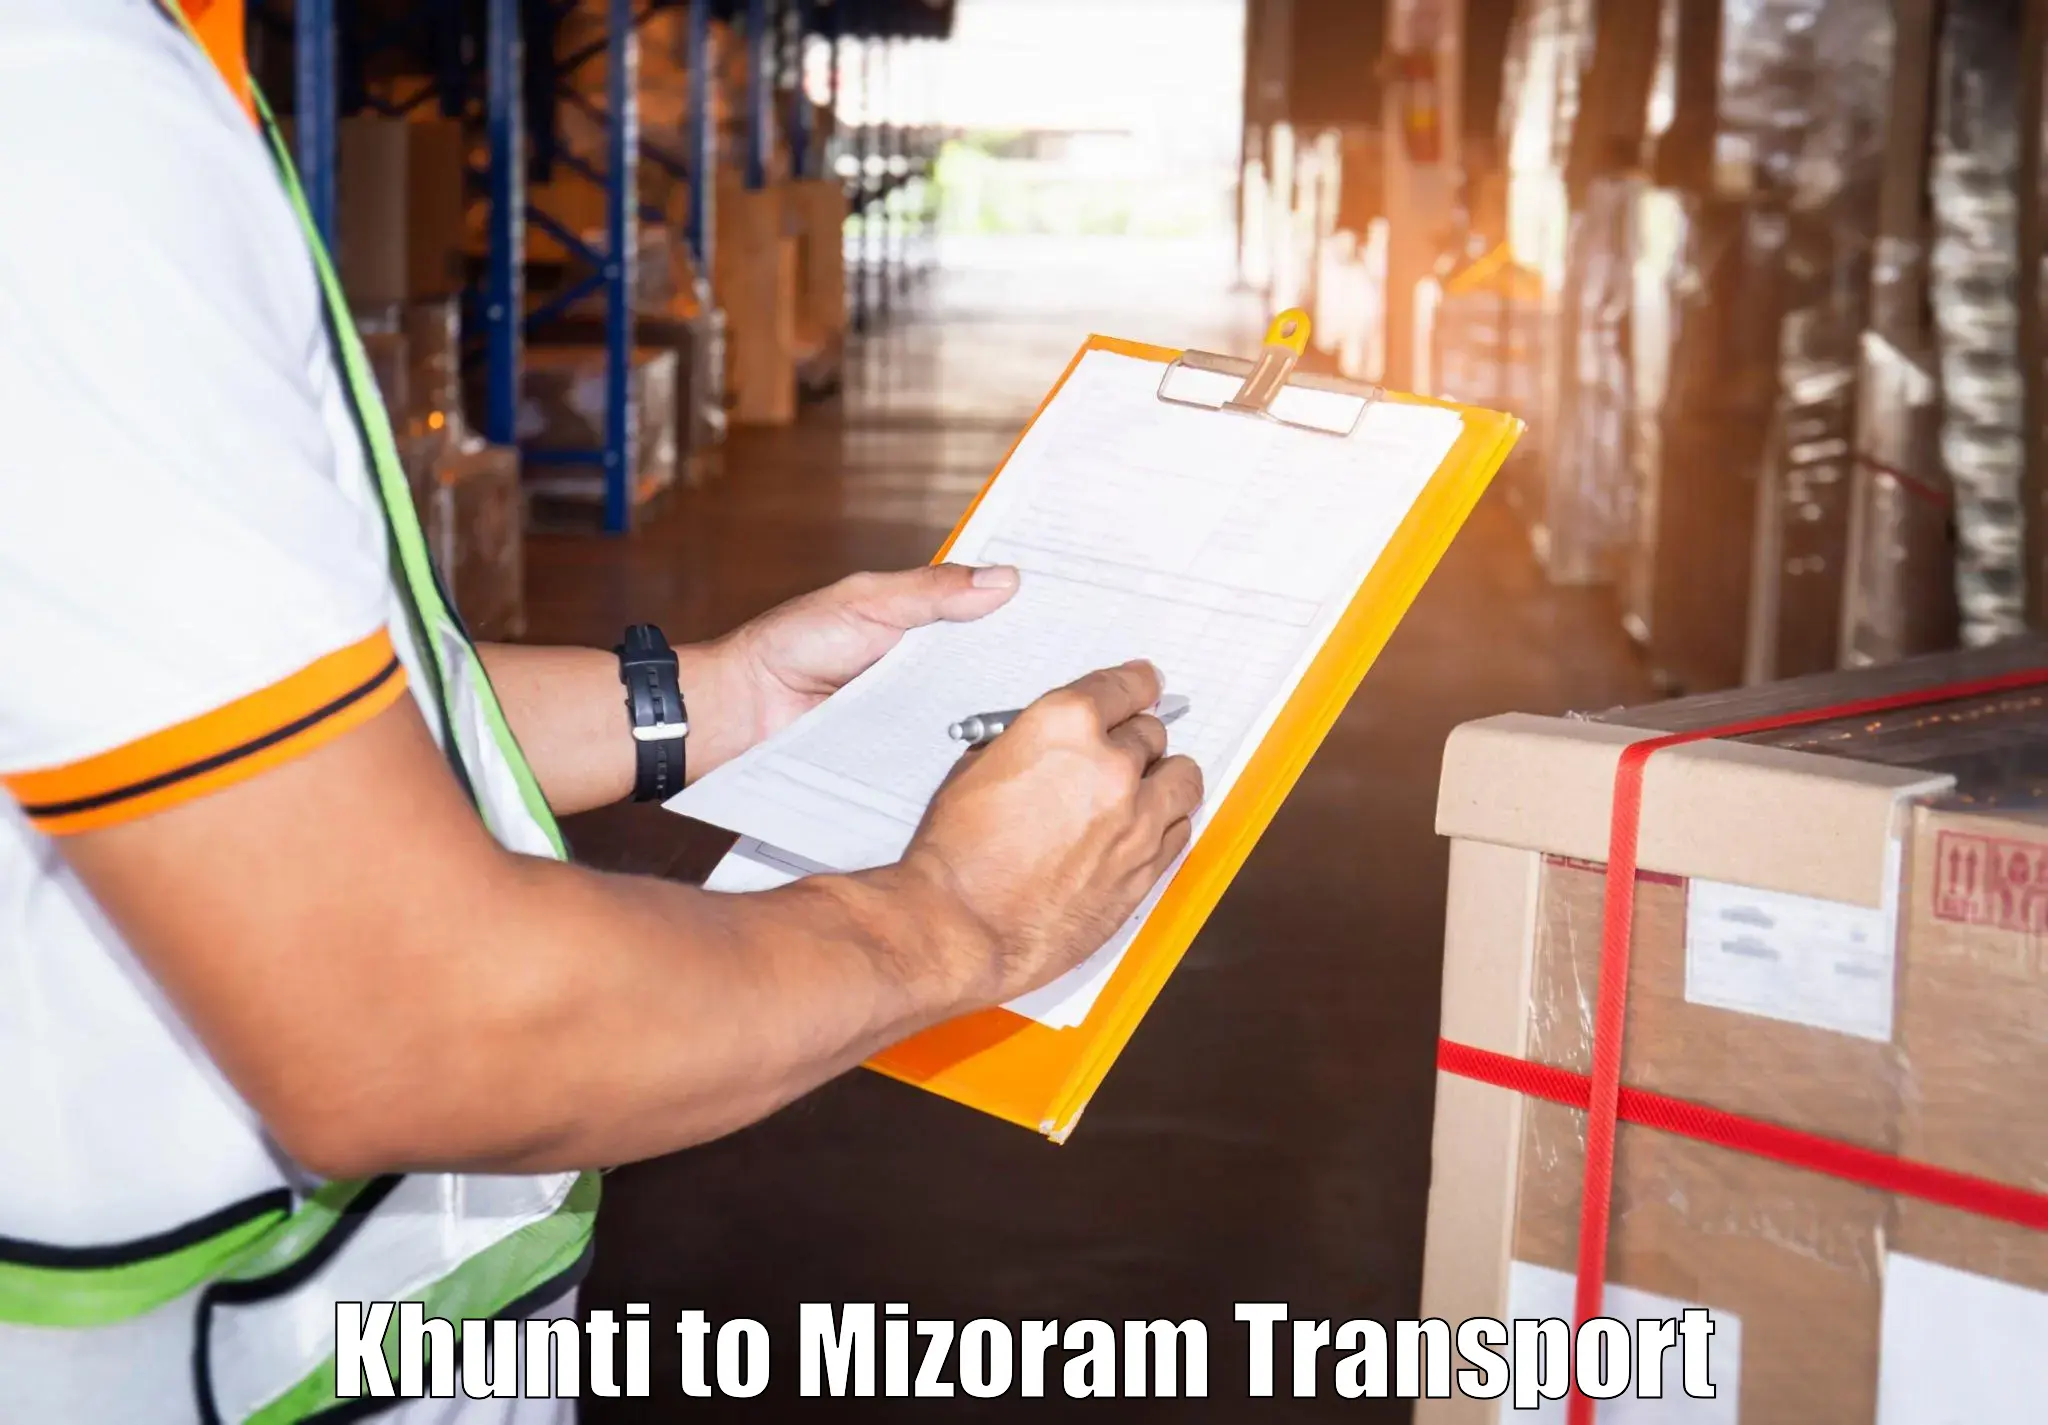 Transport in sharing Khunti to Mizoram